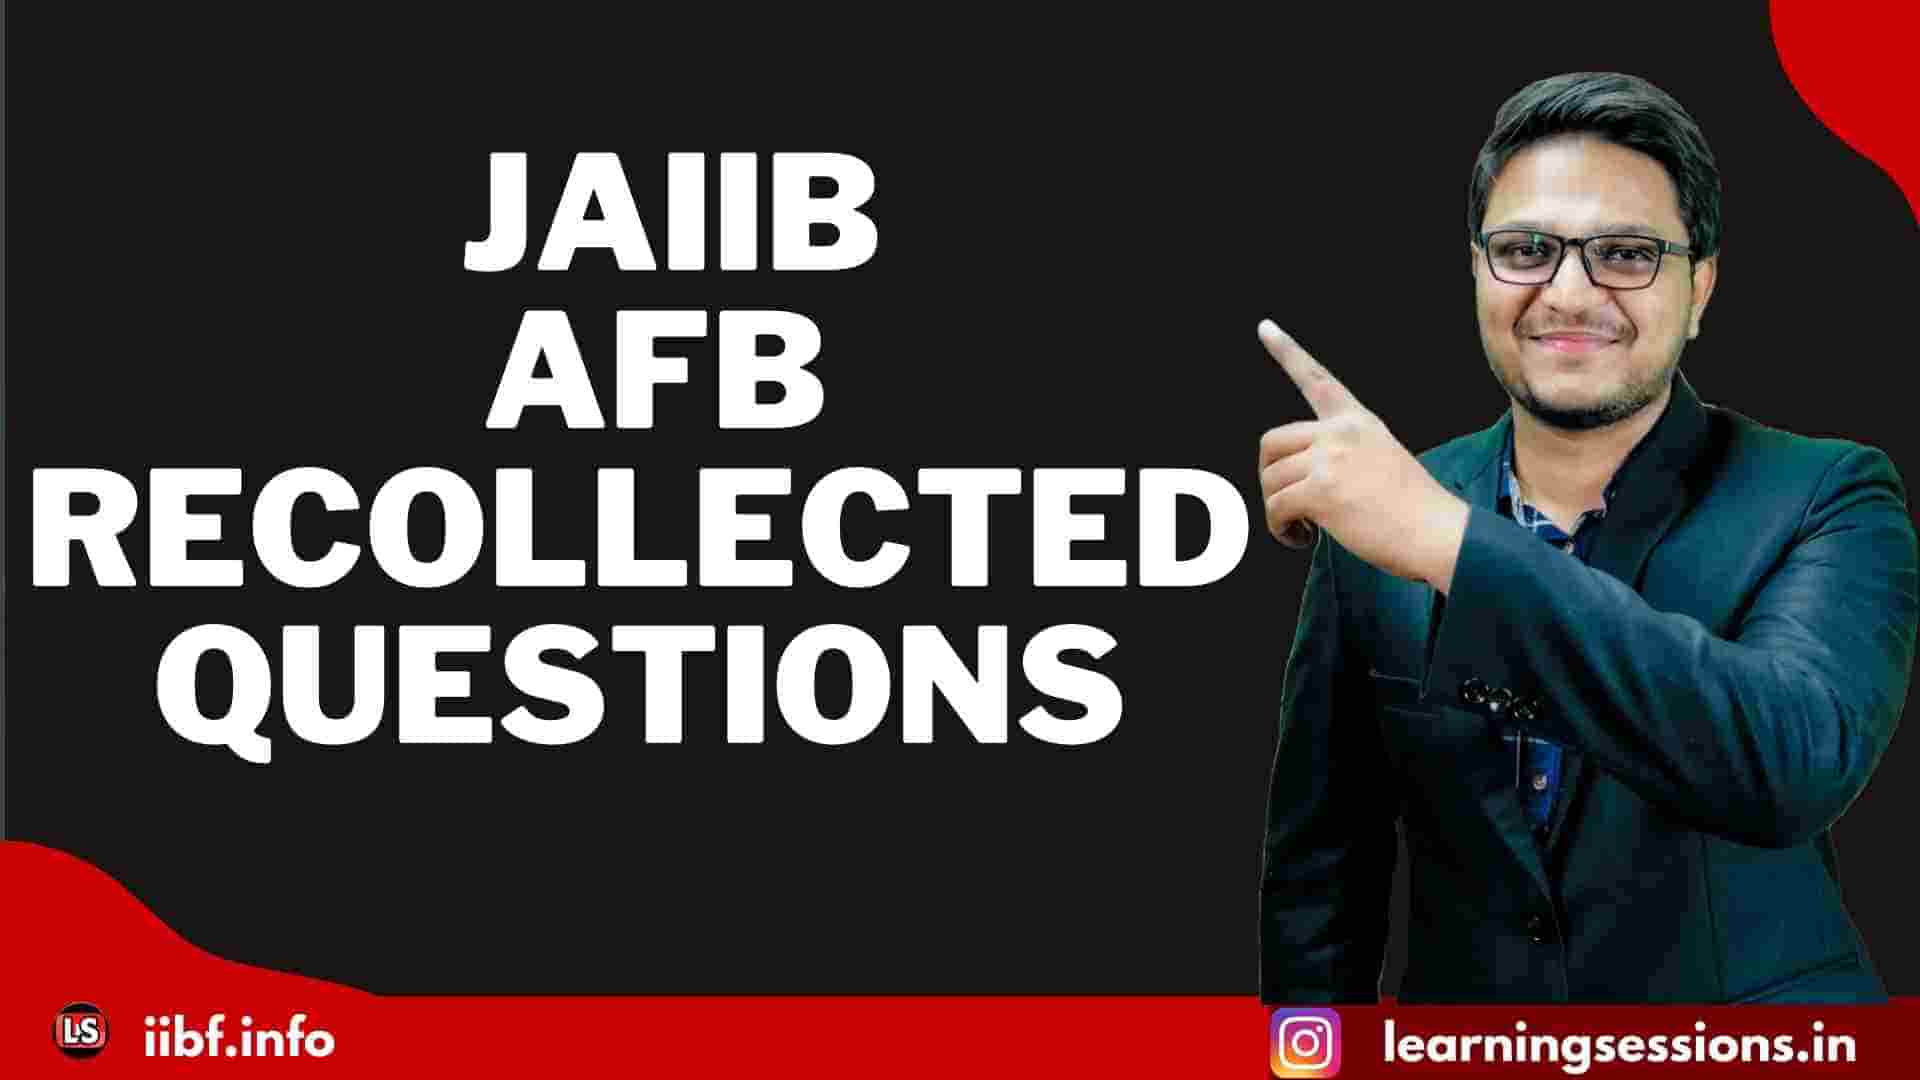 IIBF | JAIIB | AFB RECOLLECTED QUESTIONS FOR 2021-2022 EXAM